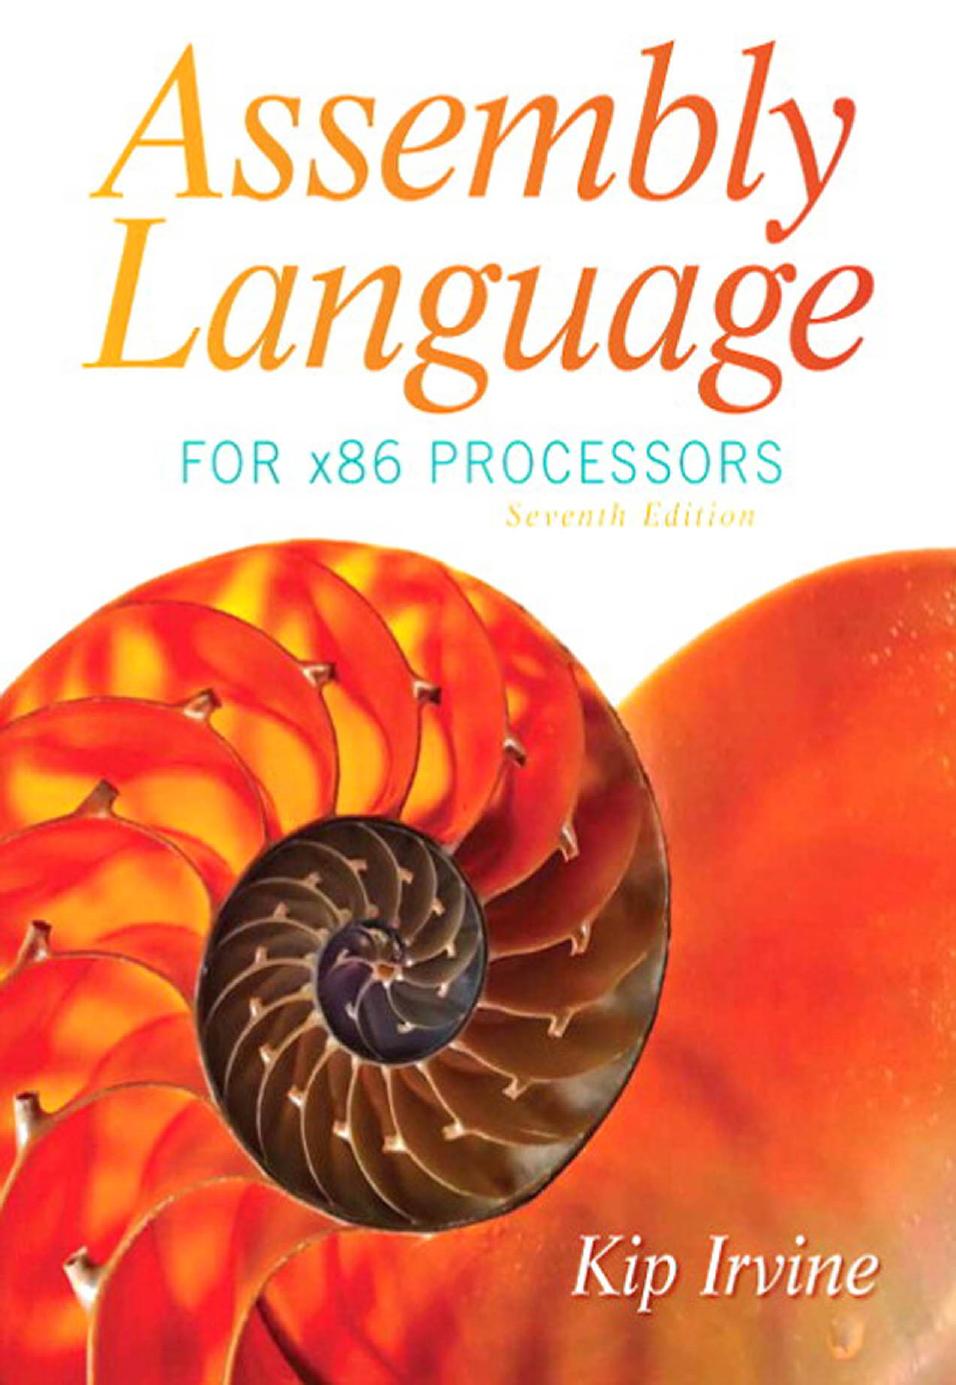 Assembly Language for x86 processors 7th ed 2015.pdf ( PDFDrive.com )